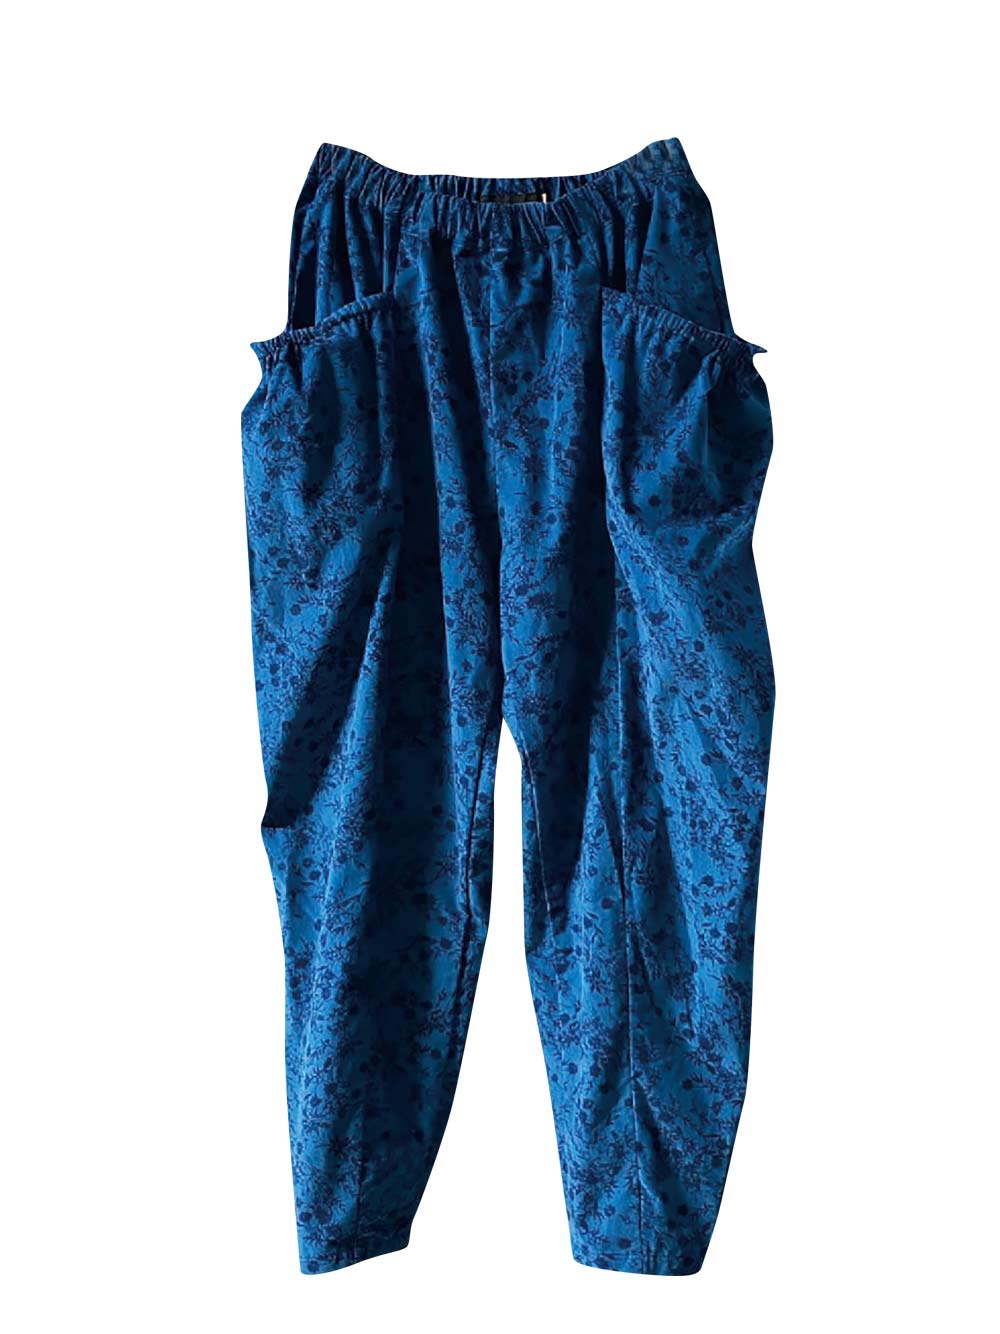 PREORDER: Floral Blue Pants